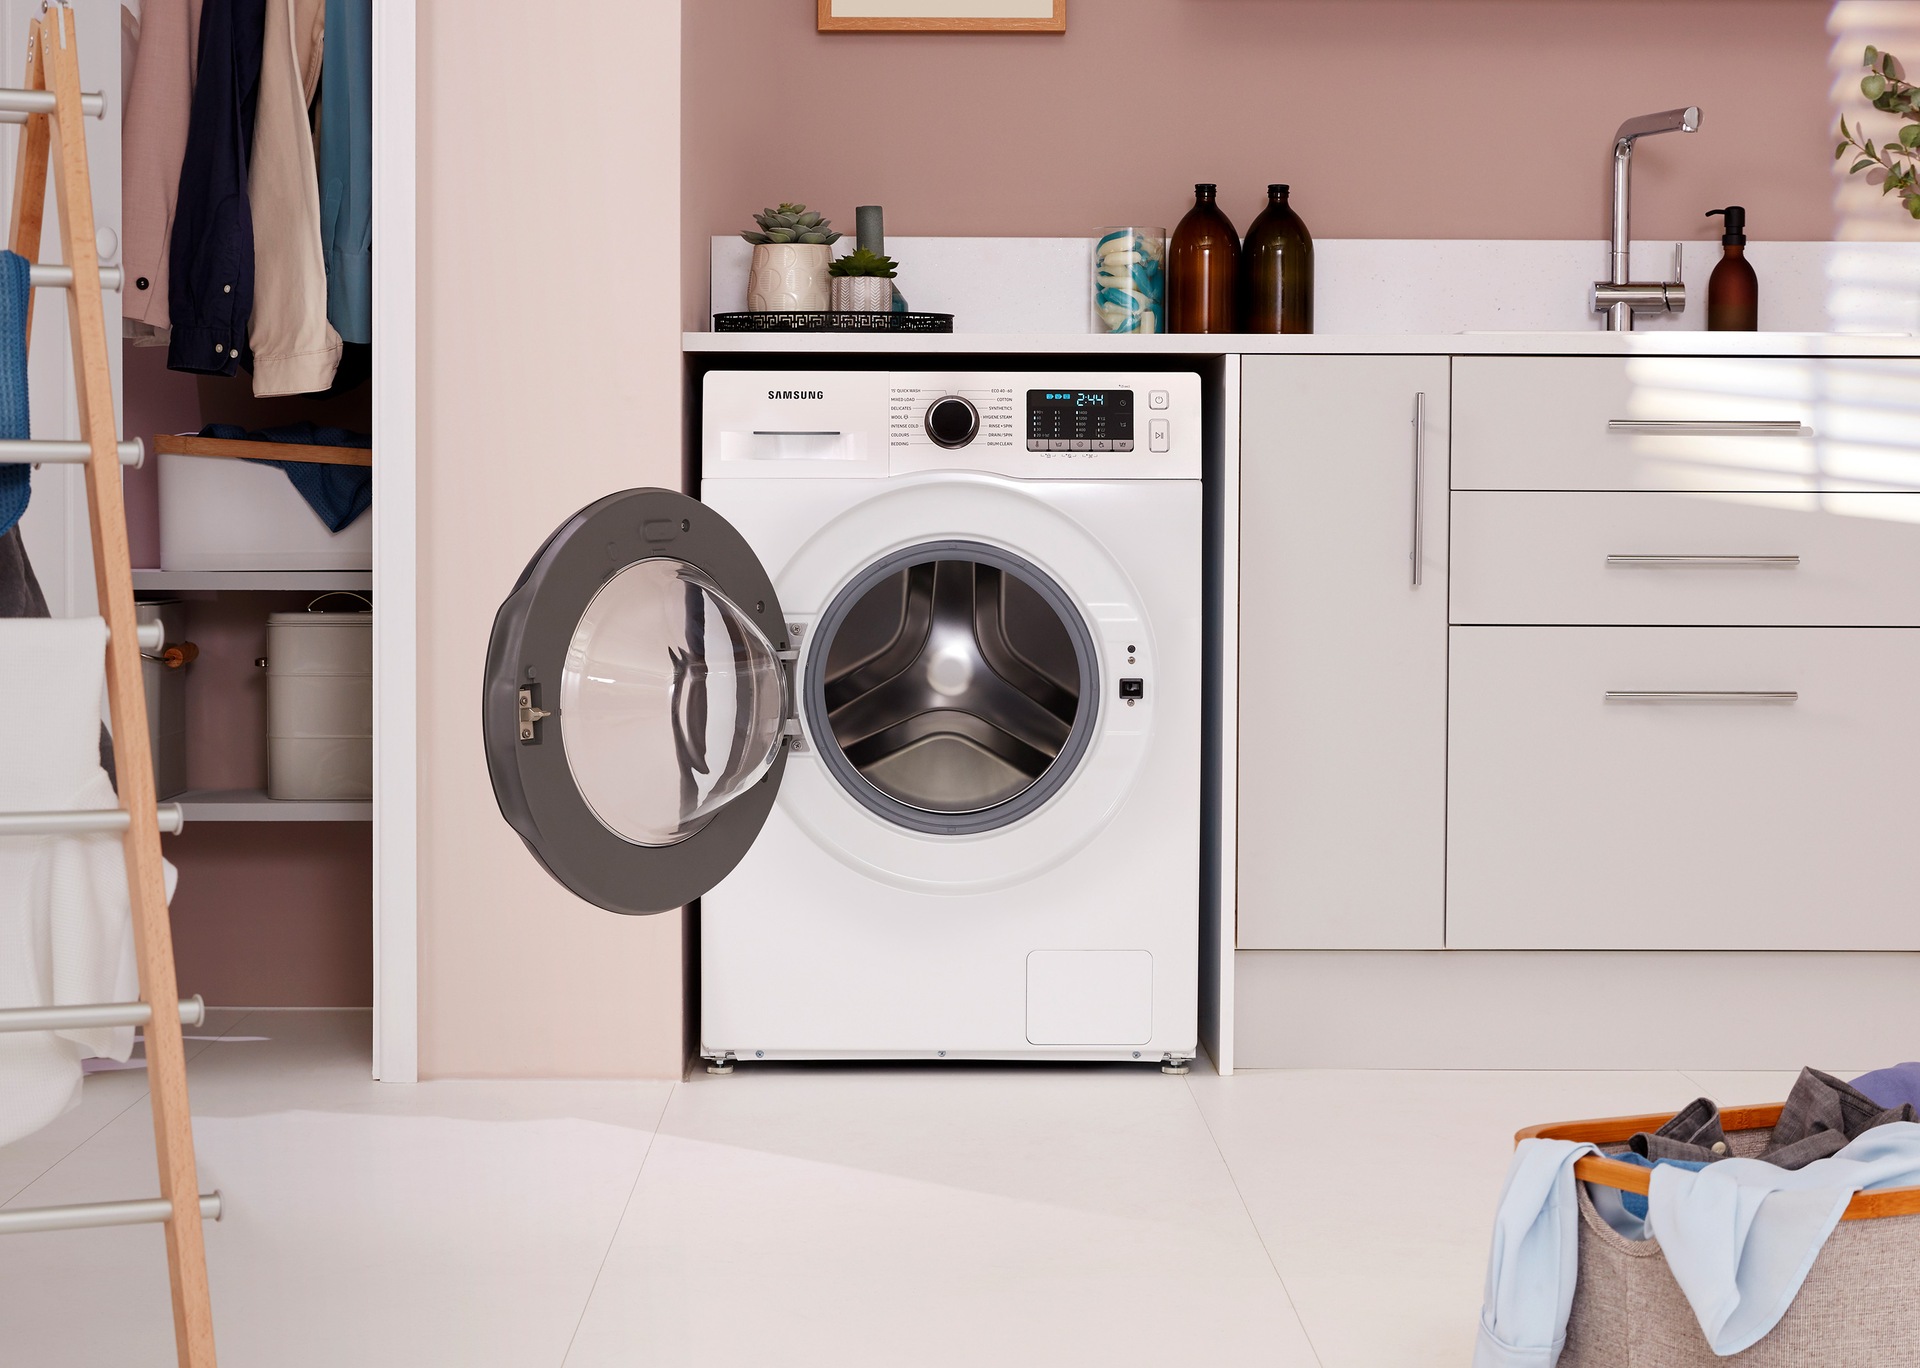 SAMSUNG Series 5 ecobubble Washing Machine, 9kg 1400rpm | eBay